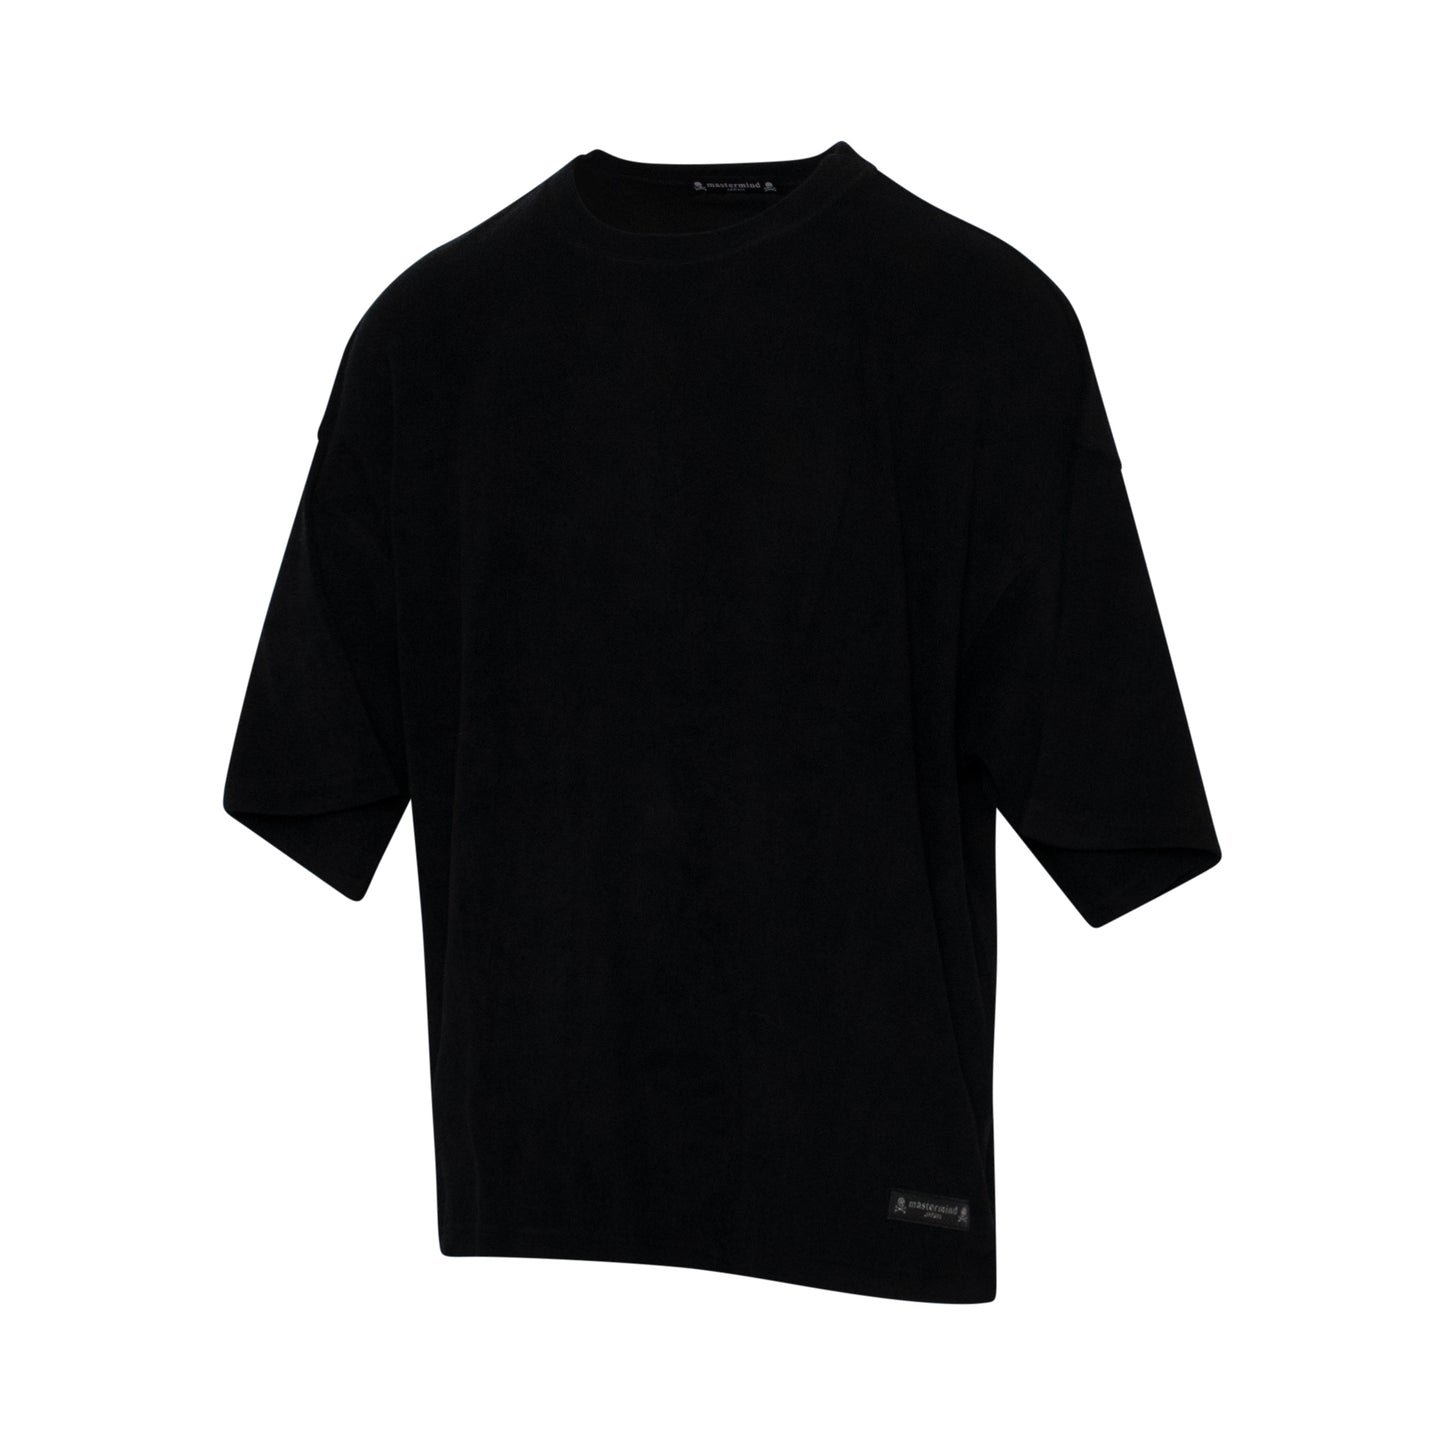 Mastermind Japan T-Shirts in Black